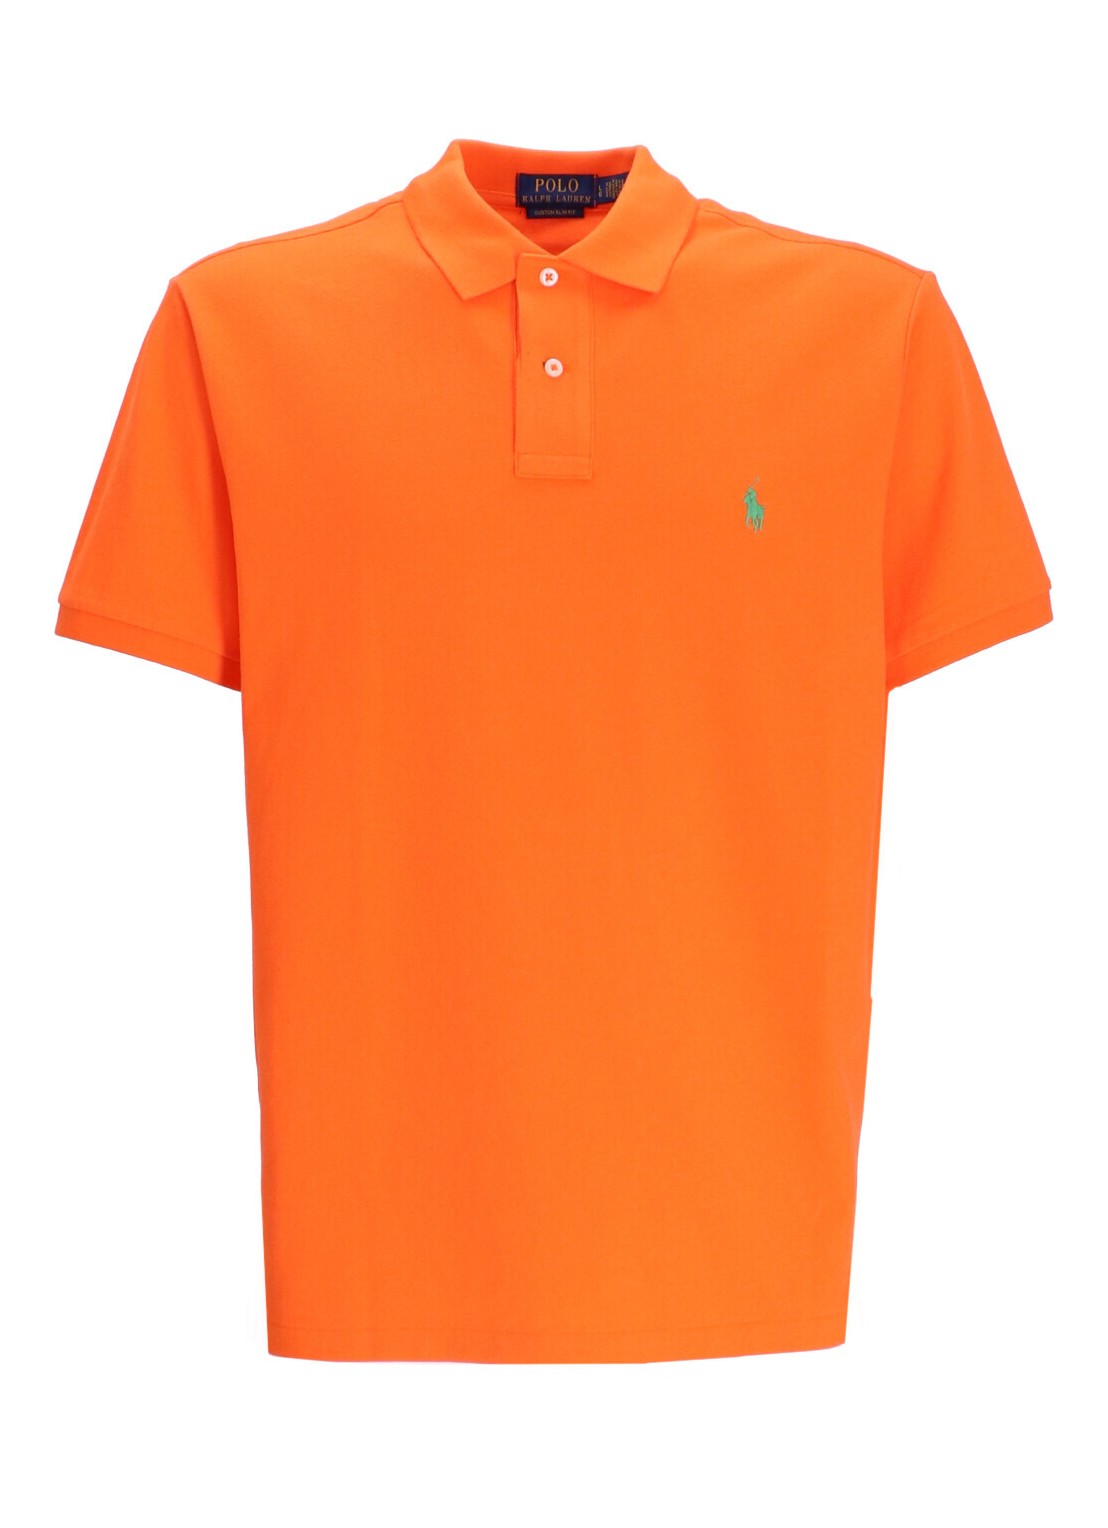 Polo polo ralph lauren polo man sskccmslm1-short sleeve-knit 710680784362 bright signal orange c6138